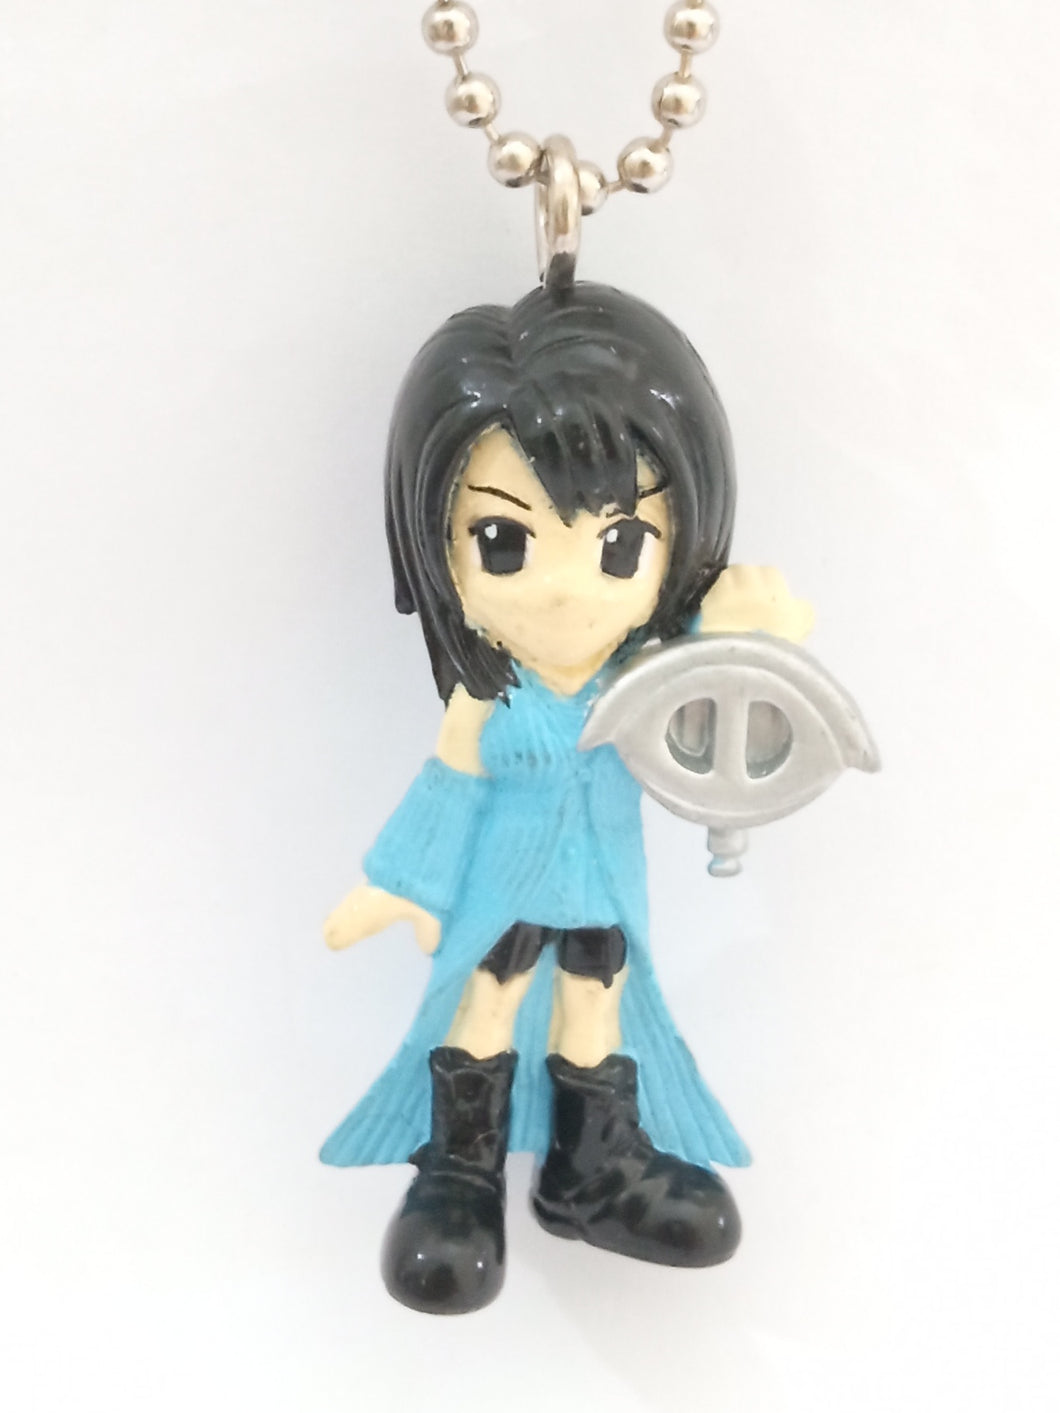 Final Fantasy X Vintage Figure Keychain Mascot Key Holder Strap Rare